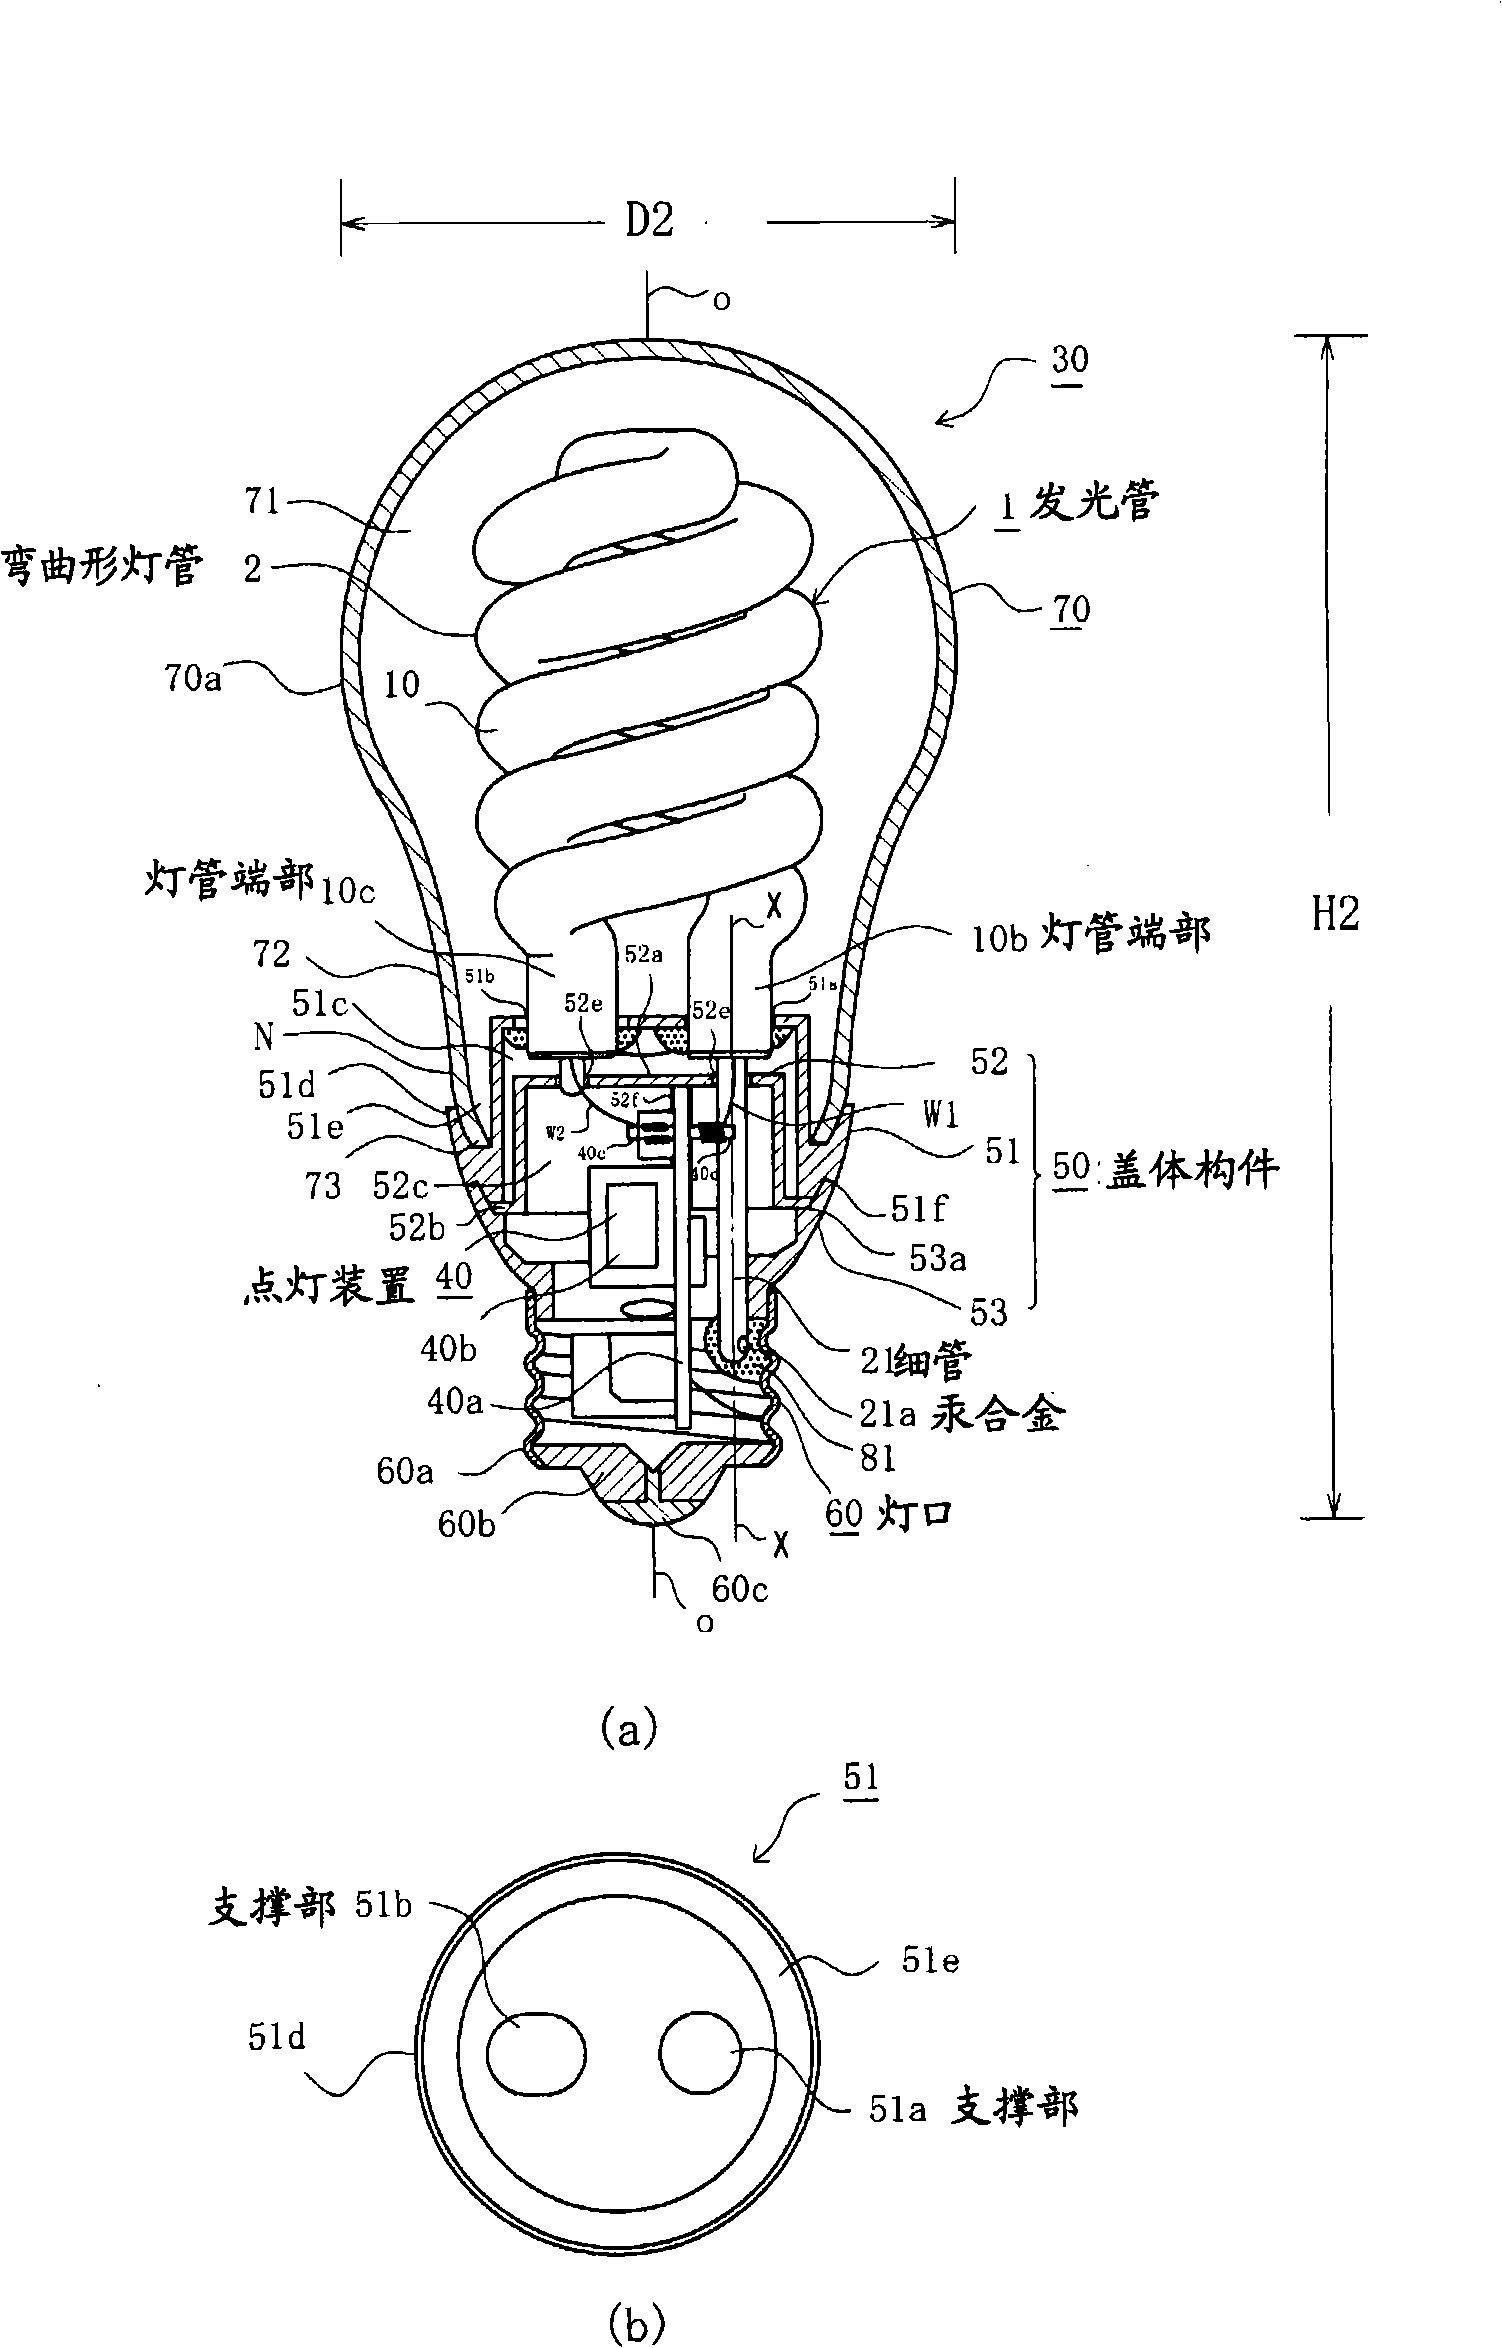 Bulb shaped fluorescent lamp and illumination instrument